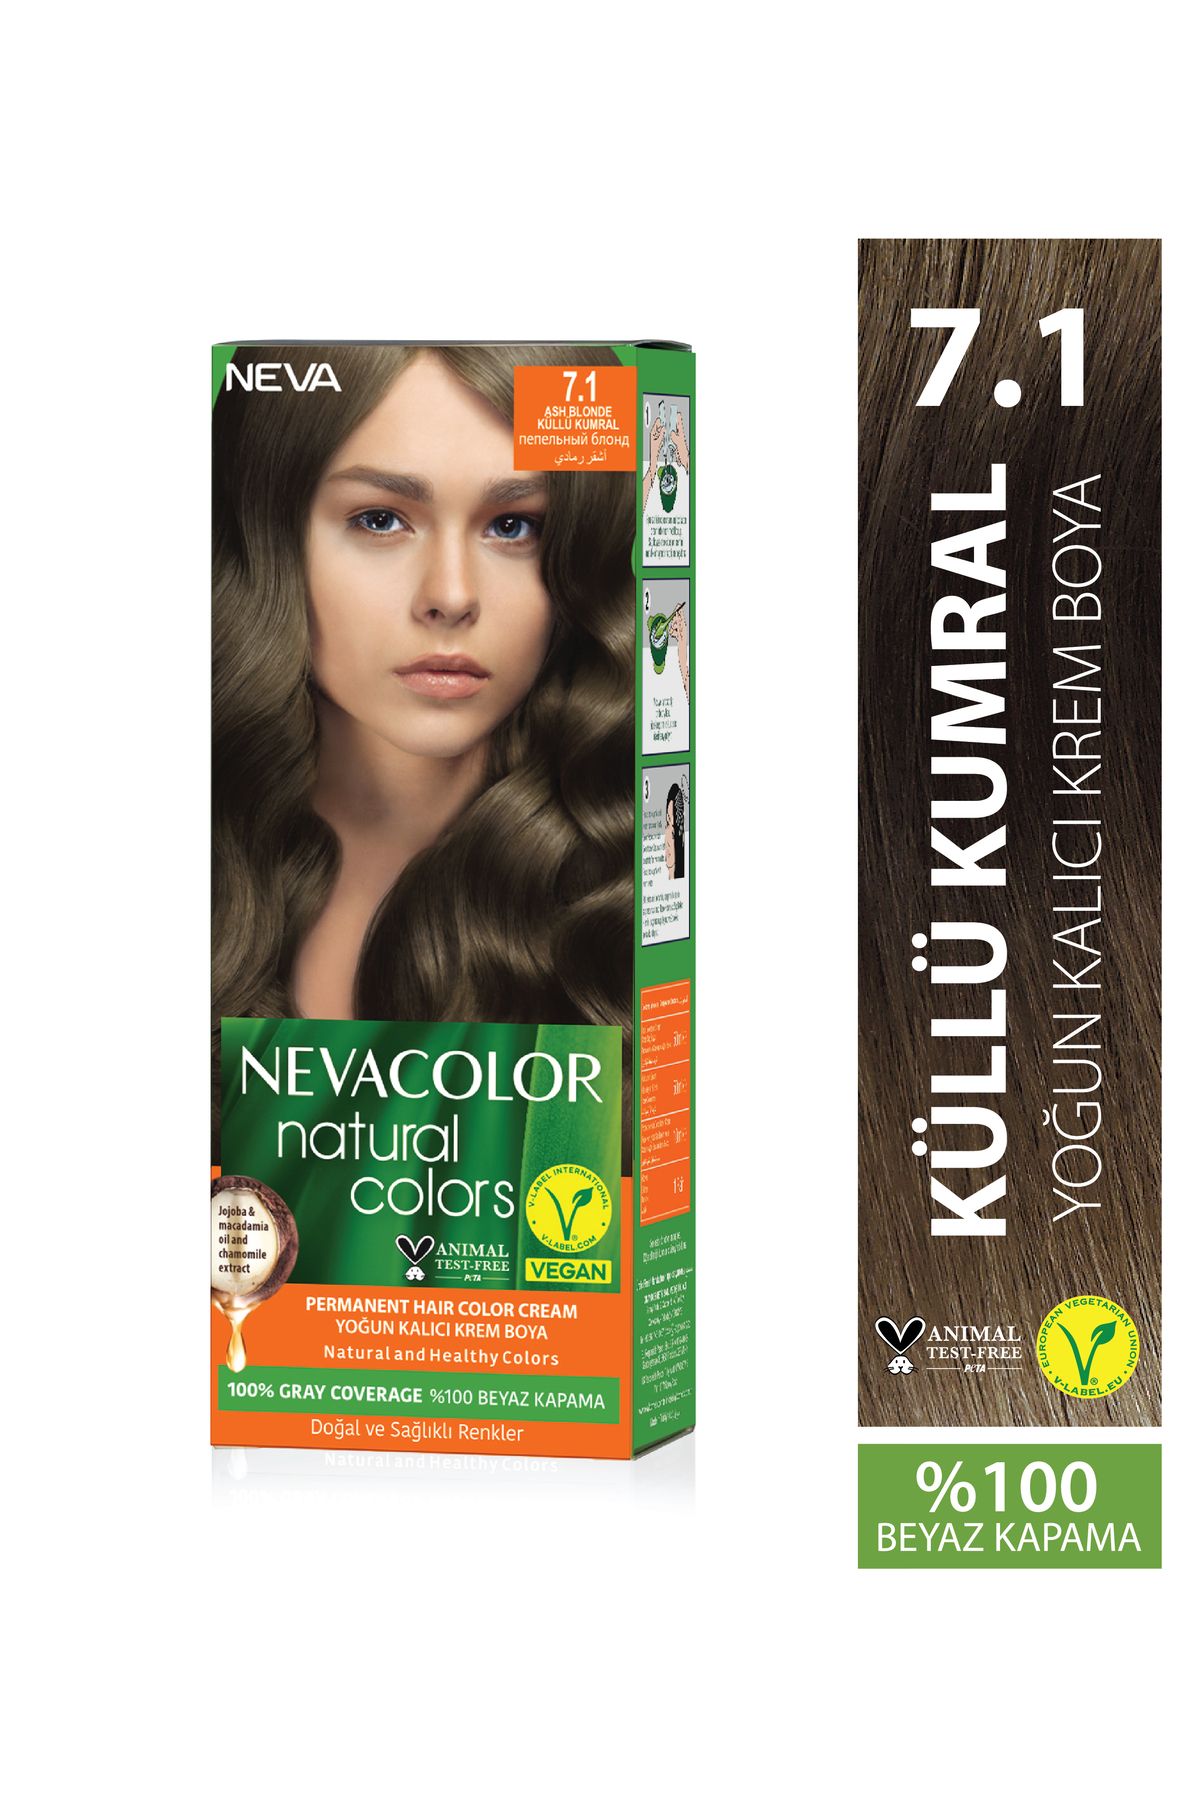 Neva Color Natural Colors 7.1 KÜLLÜ KUMRAL Kalıcı Krem Saç Boyası Seti